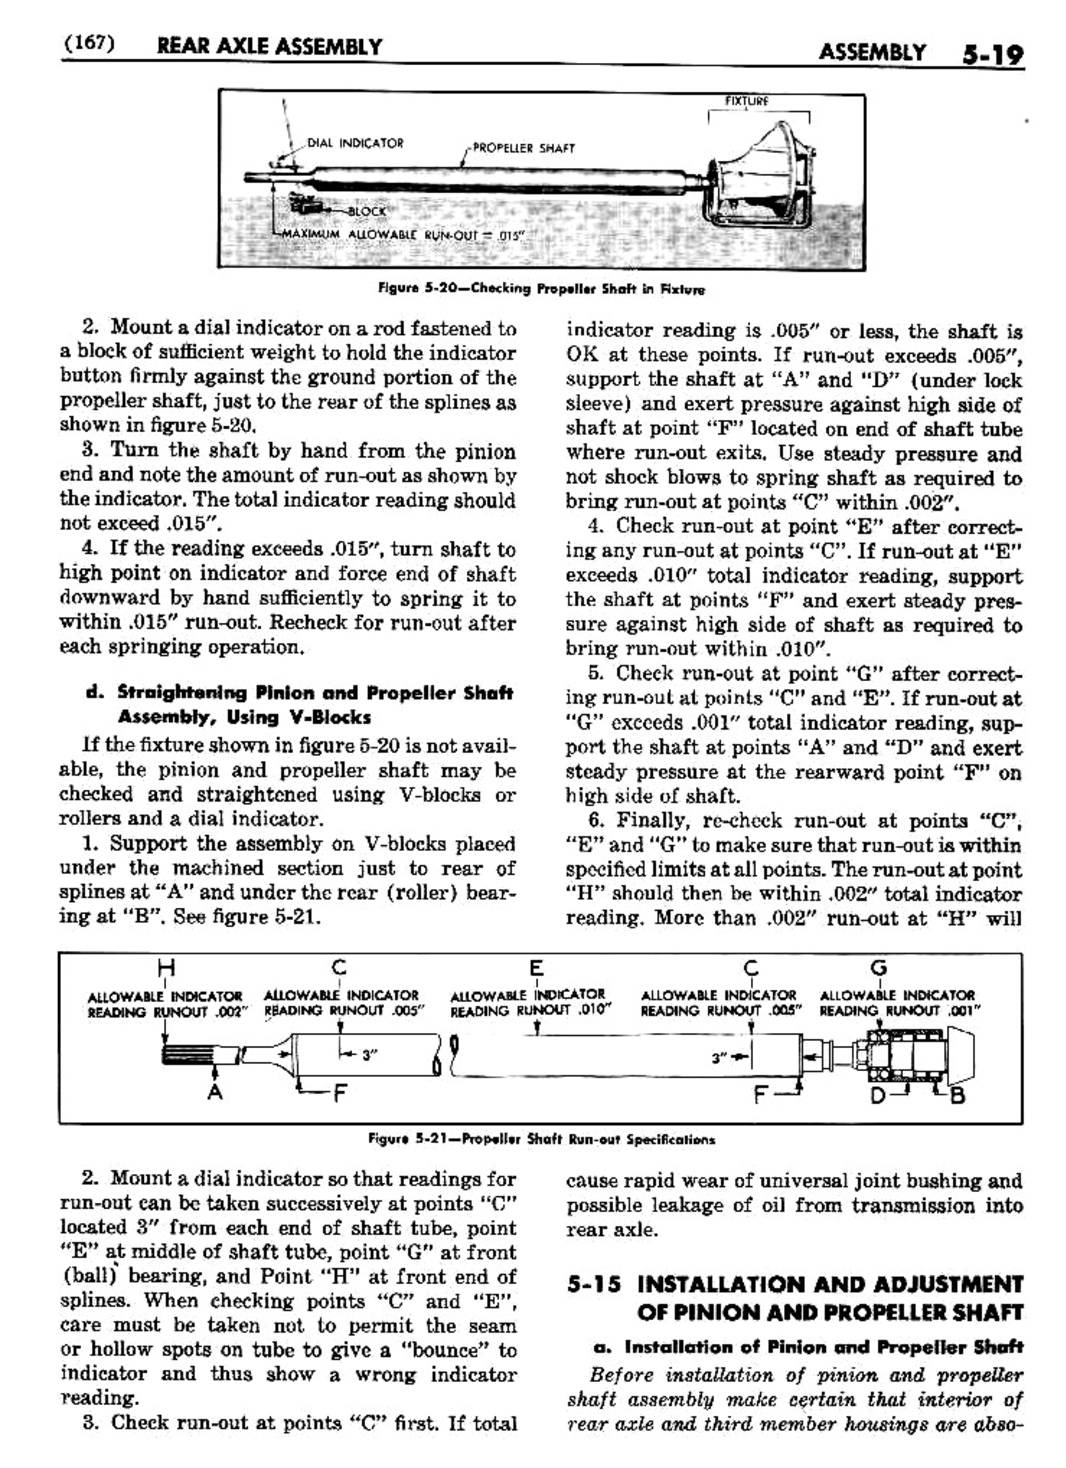 n_06 1950 Buick Shop Manual - Rear Axle-019-019.jpg